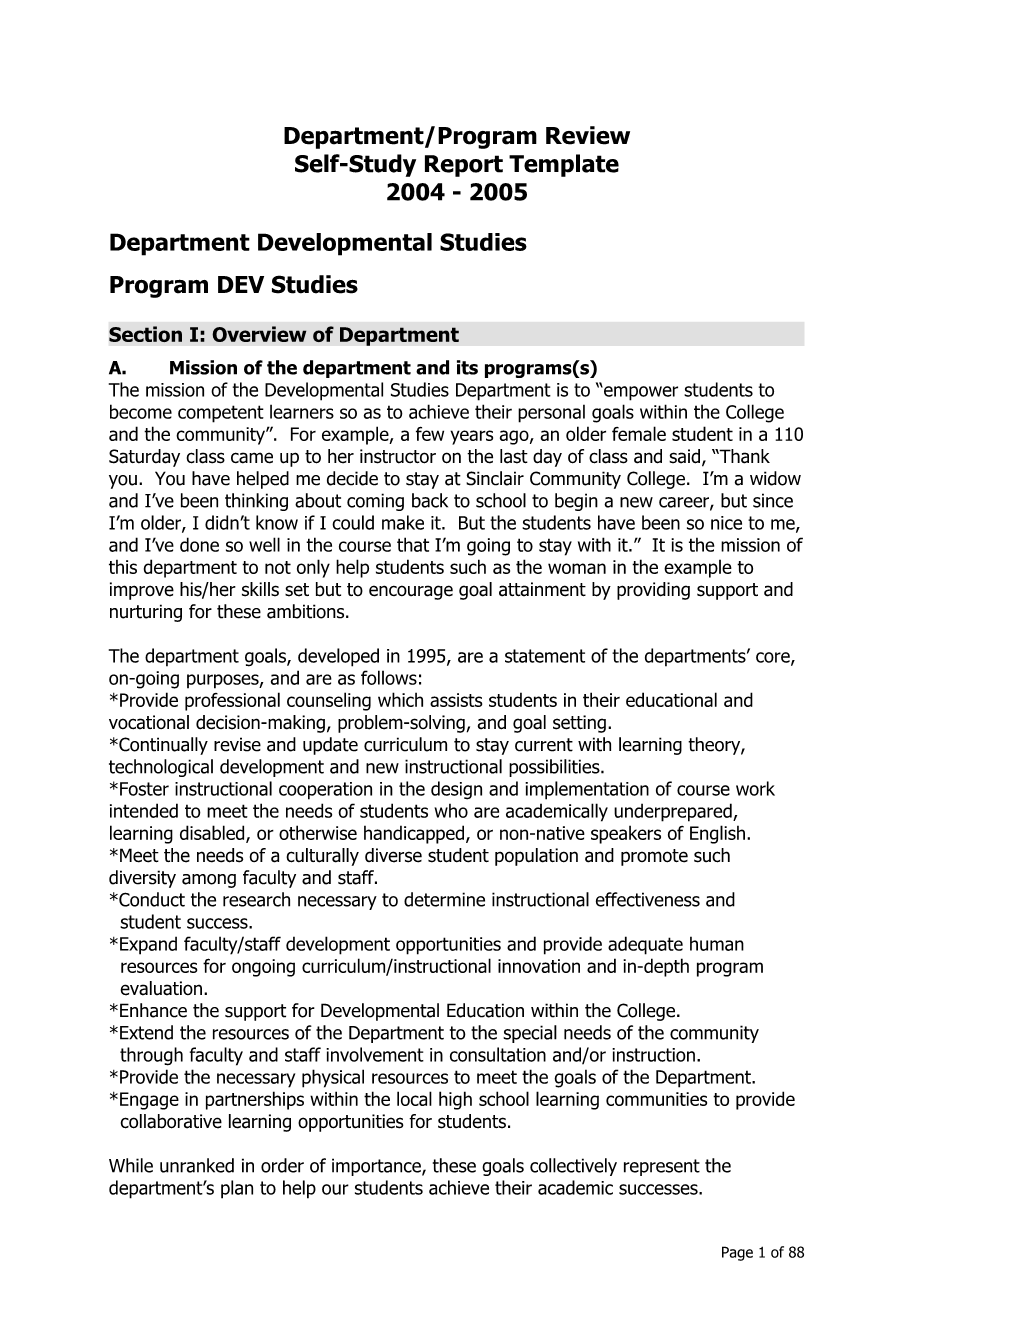 Department/Program Review s1